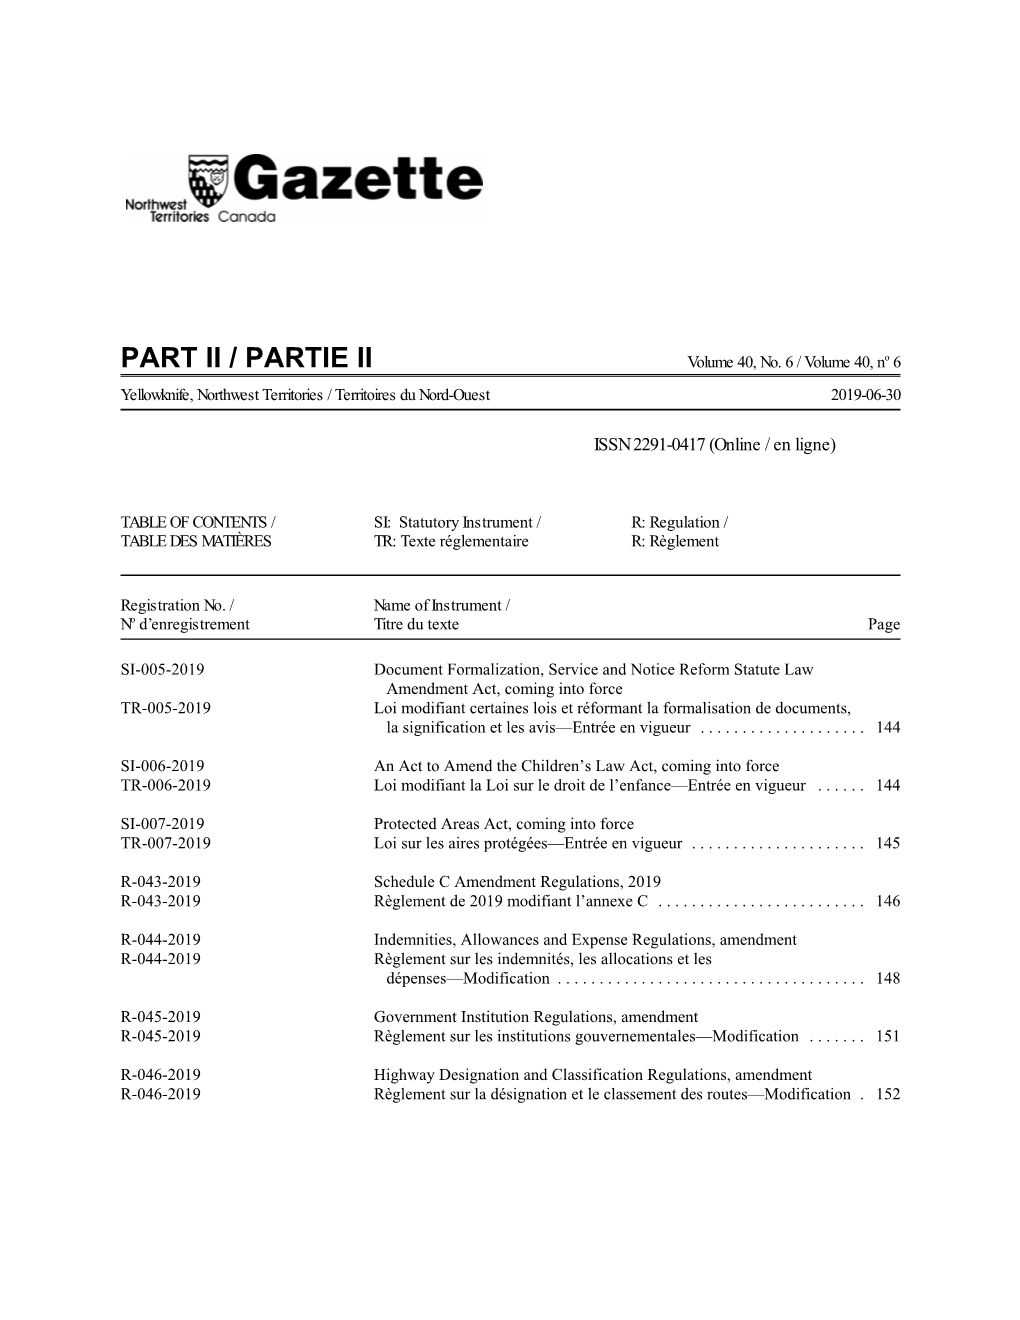 NWT Gazette, Vol. 40, Issue 6, Part 2 (June 2019)